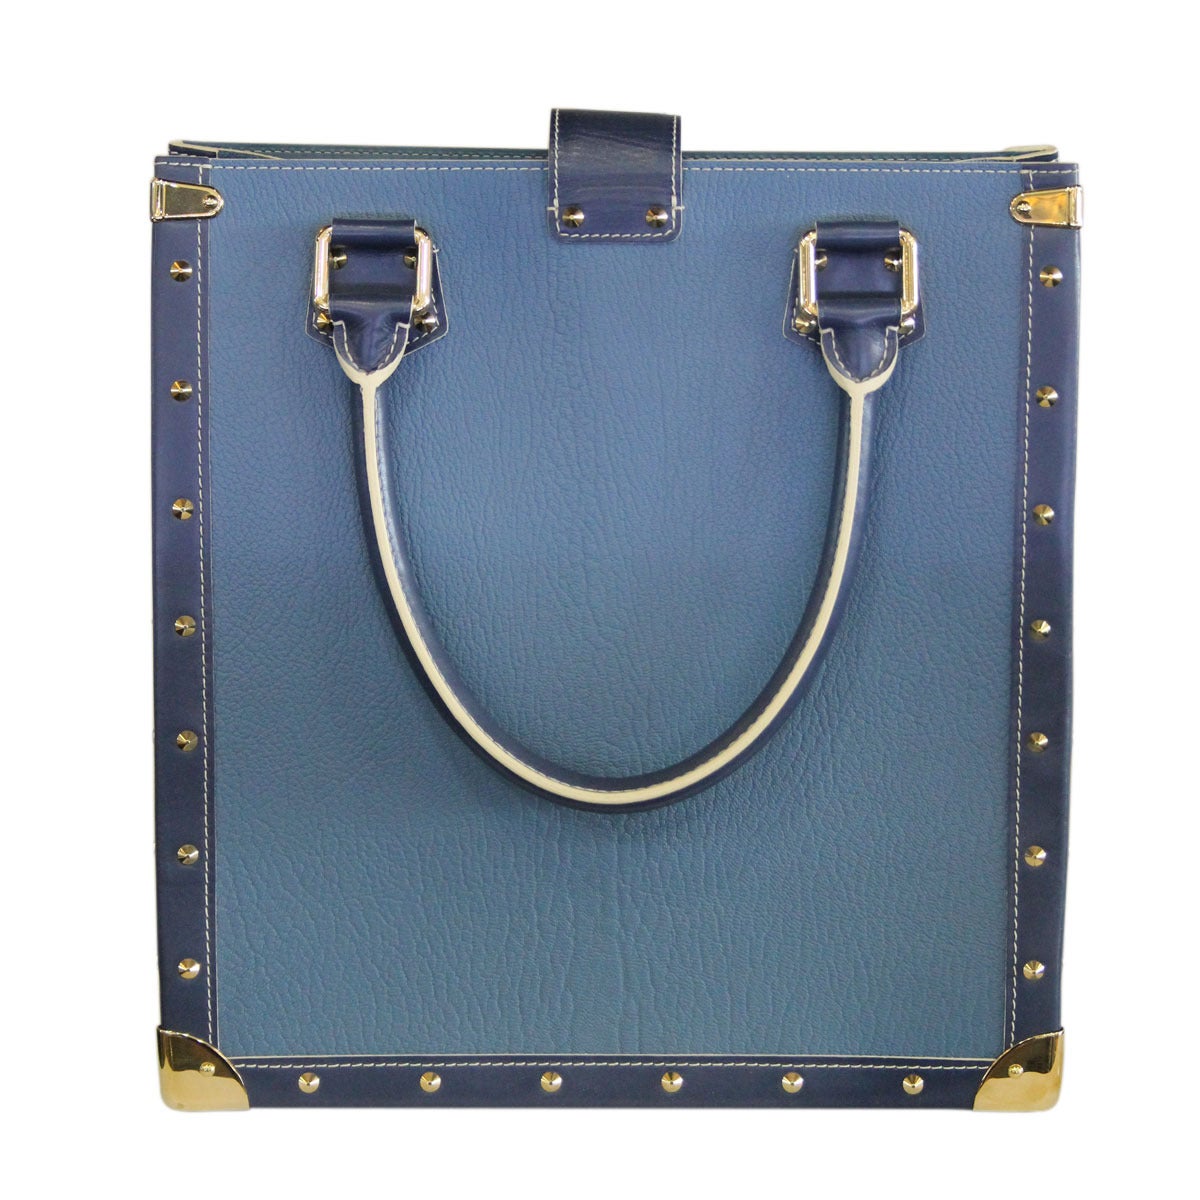 Brand: Louis Vuitton
Handles: Blue Leather Rolled Handles; Drop: 7